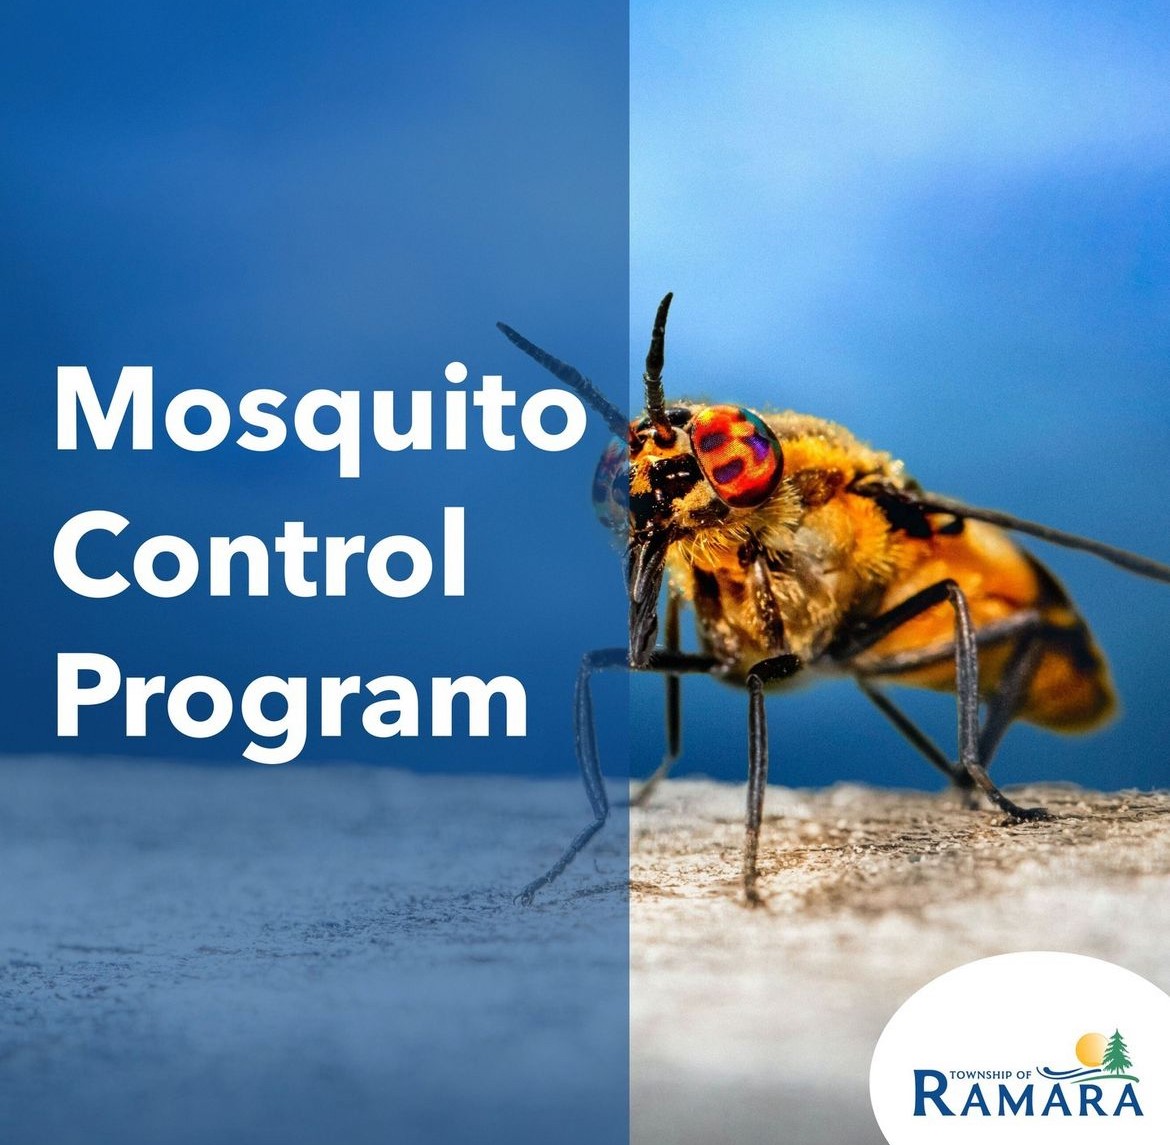 Mosquito Control Program picture